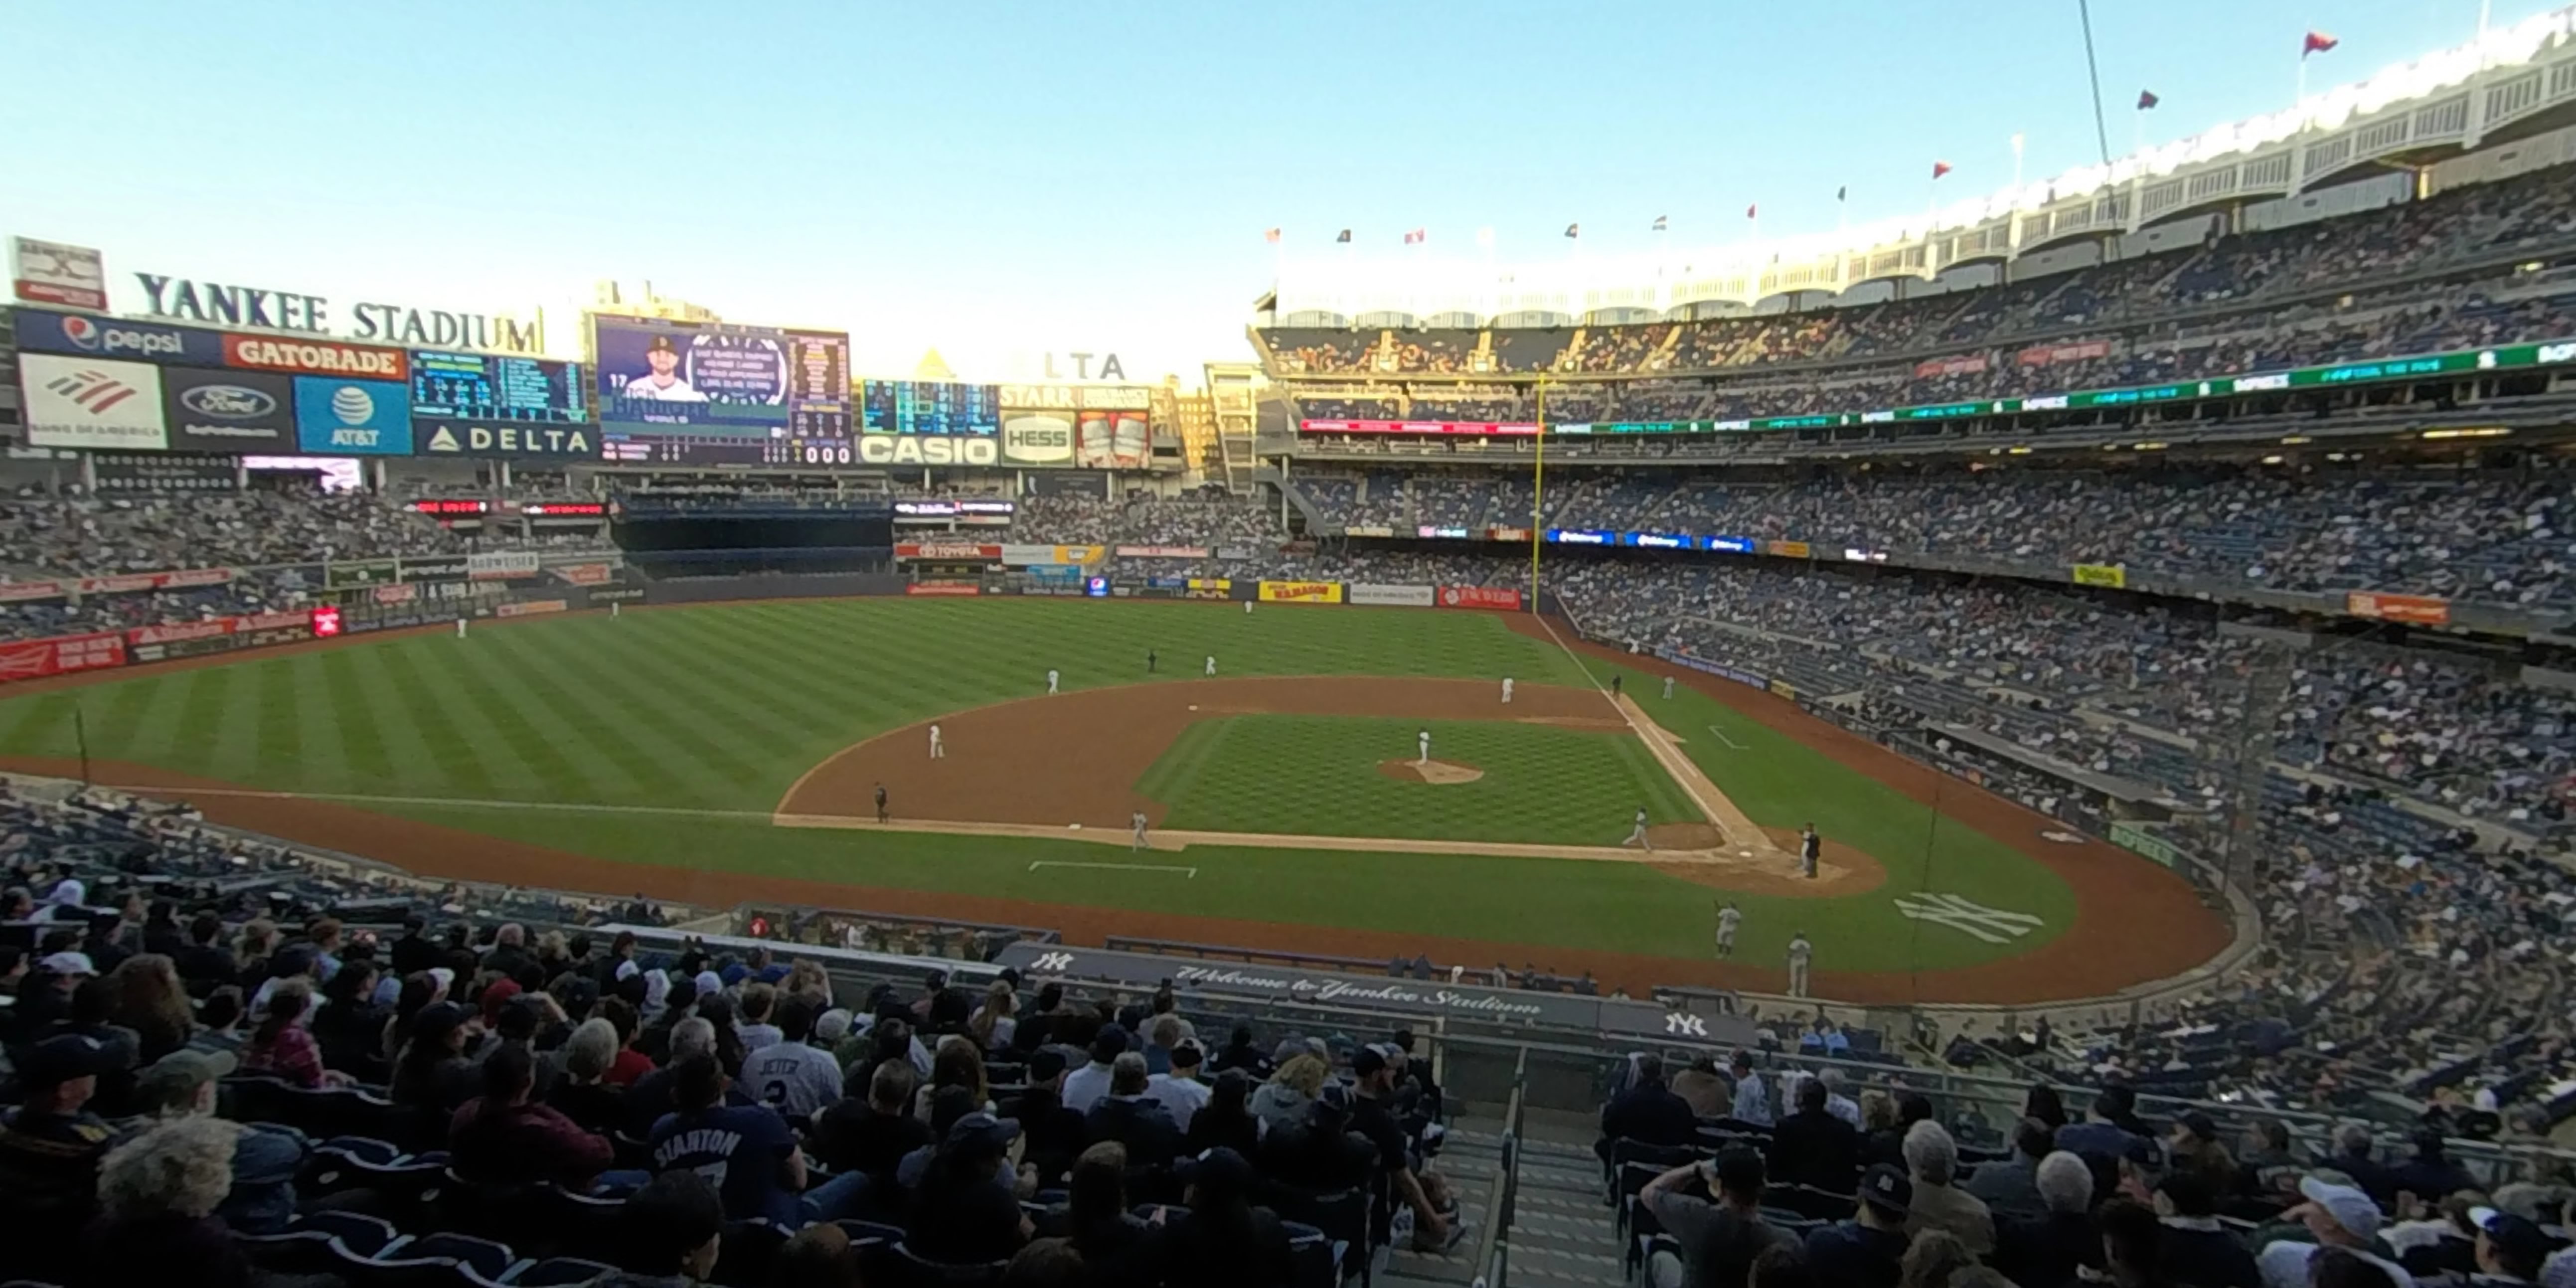 section 223 panoramic seat view  for baseball - yankee stadium